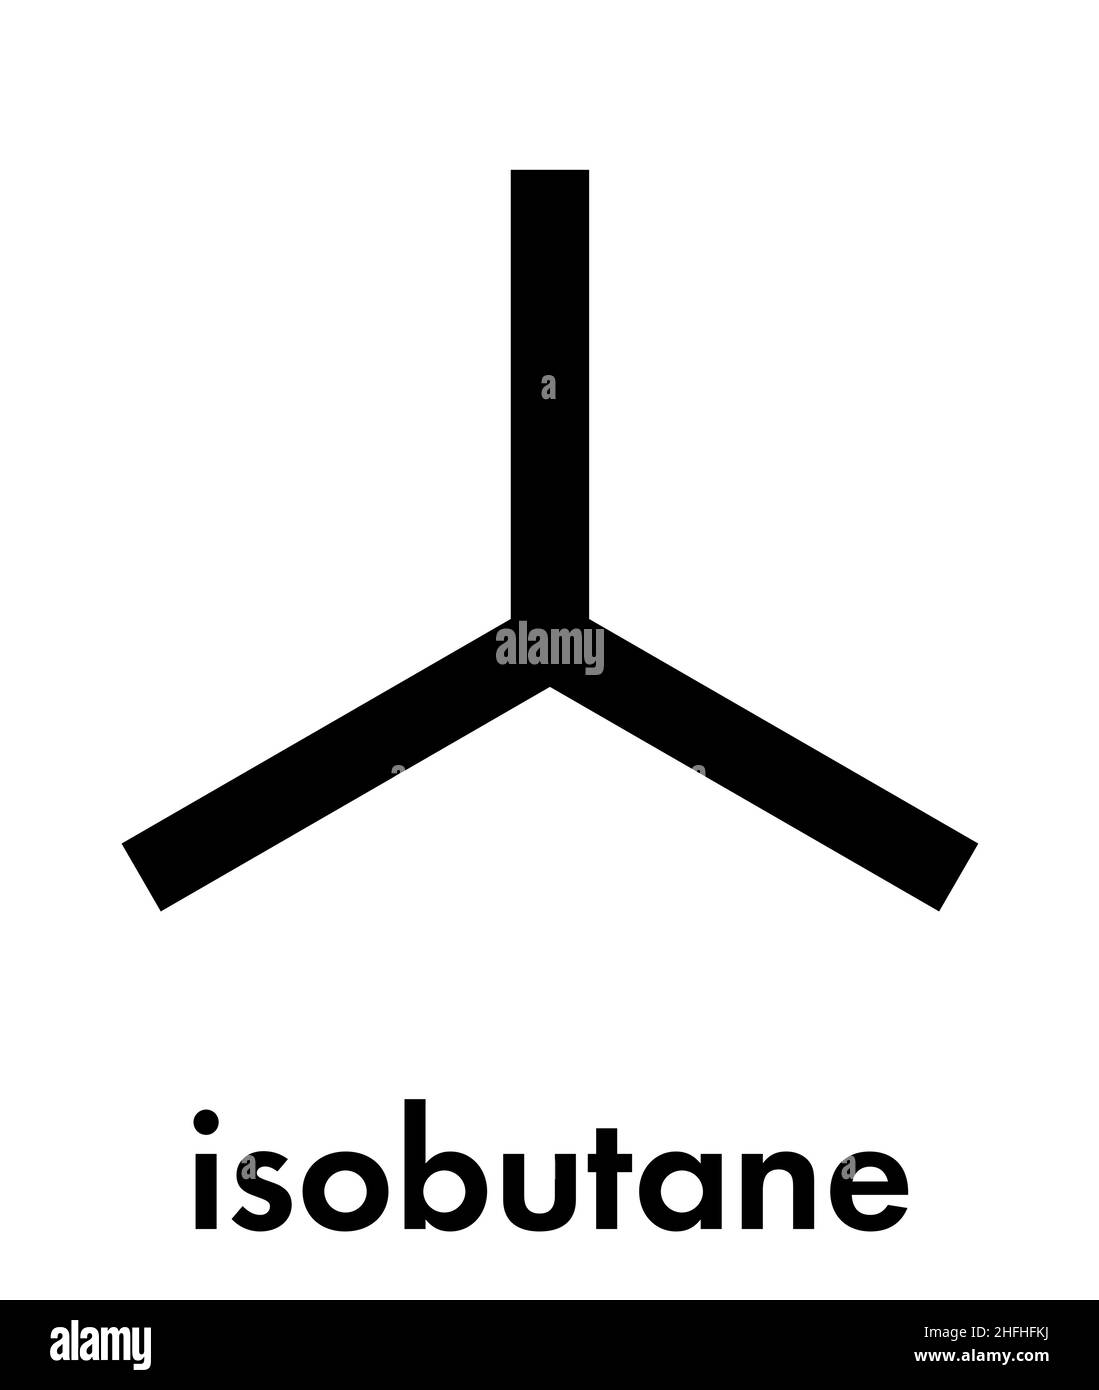 Isobutane (i-butane, methylpropane) alkane molecule. Used as refrigerant (in freezers and refrigerators) and as propellant (in aerosol sprays). Skelet Stock Vector